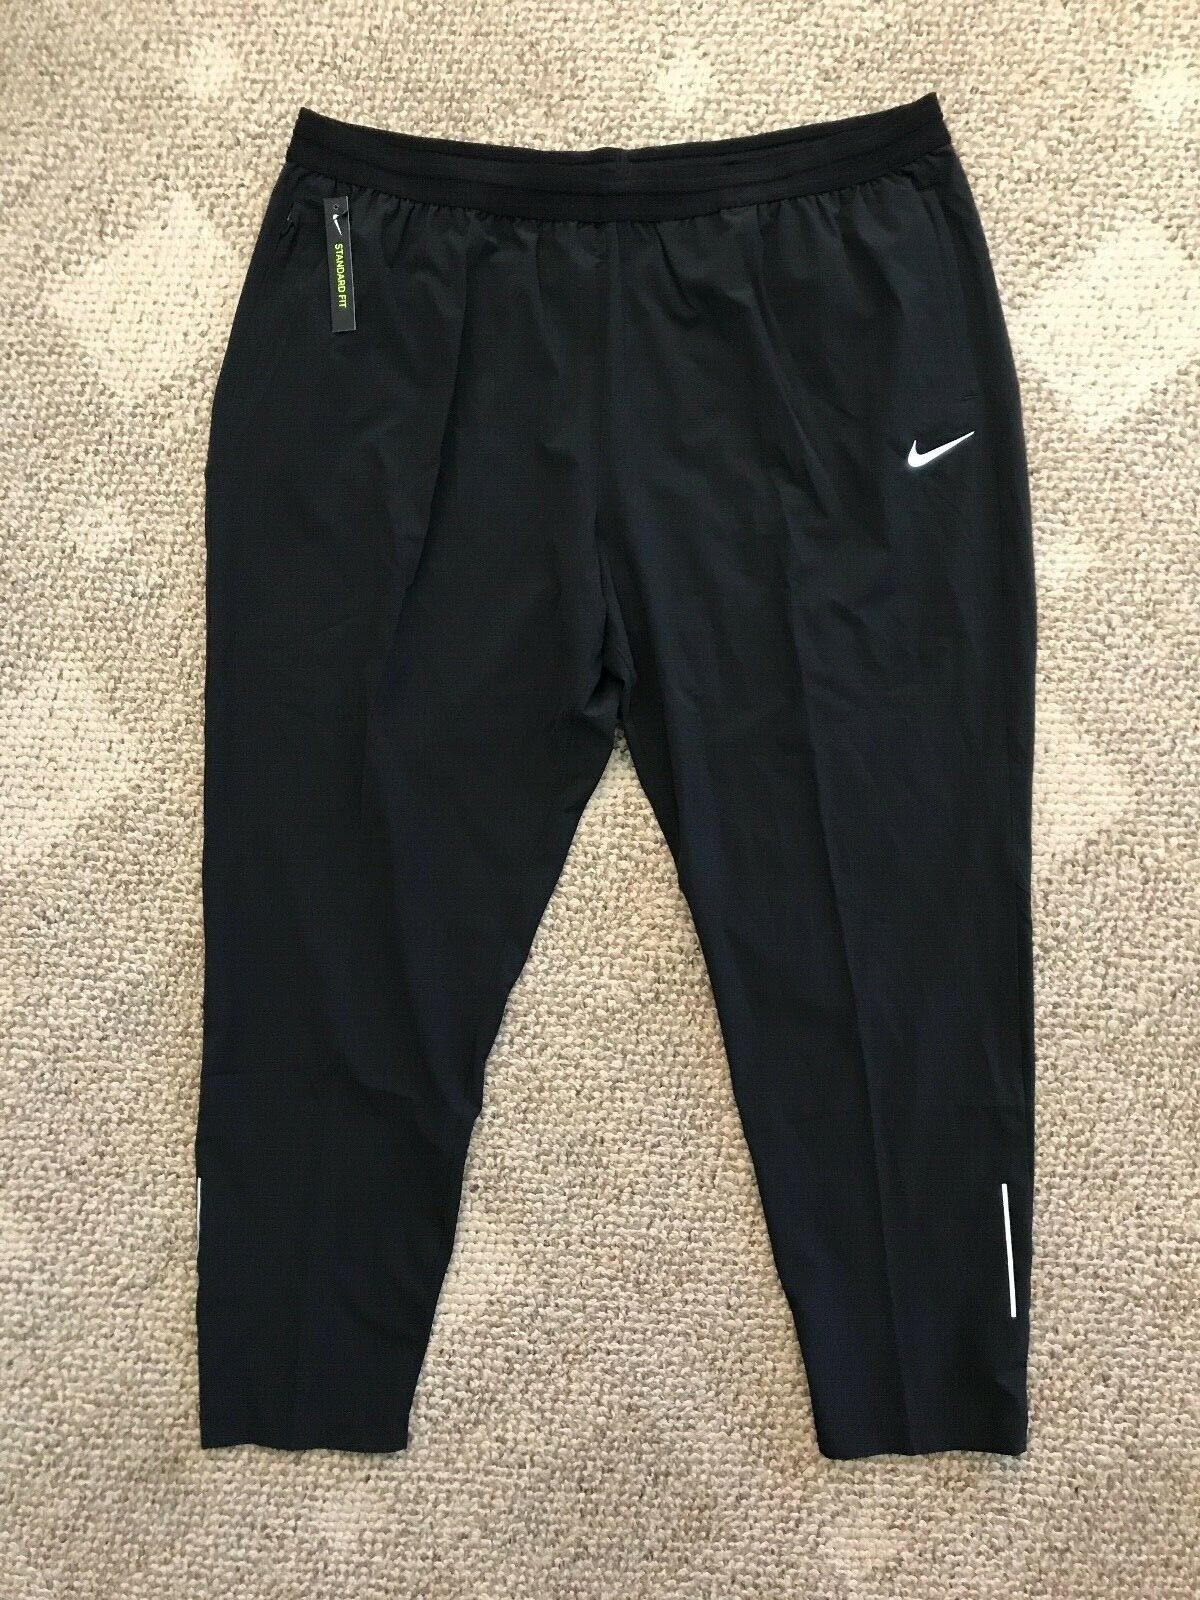 Nike Flex Essential Women's 7/8 Running Pants Black Size XL